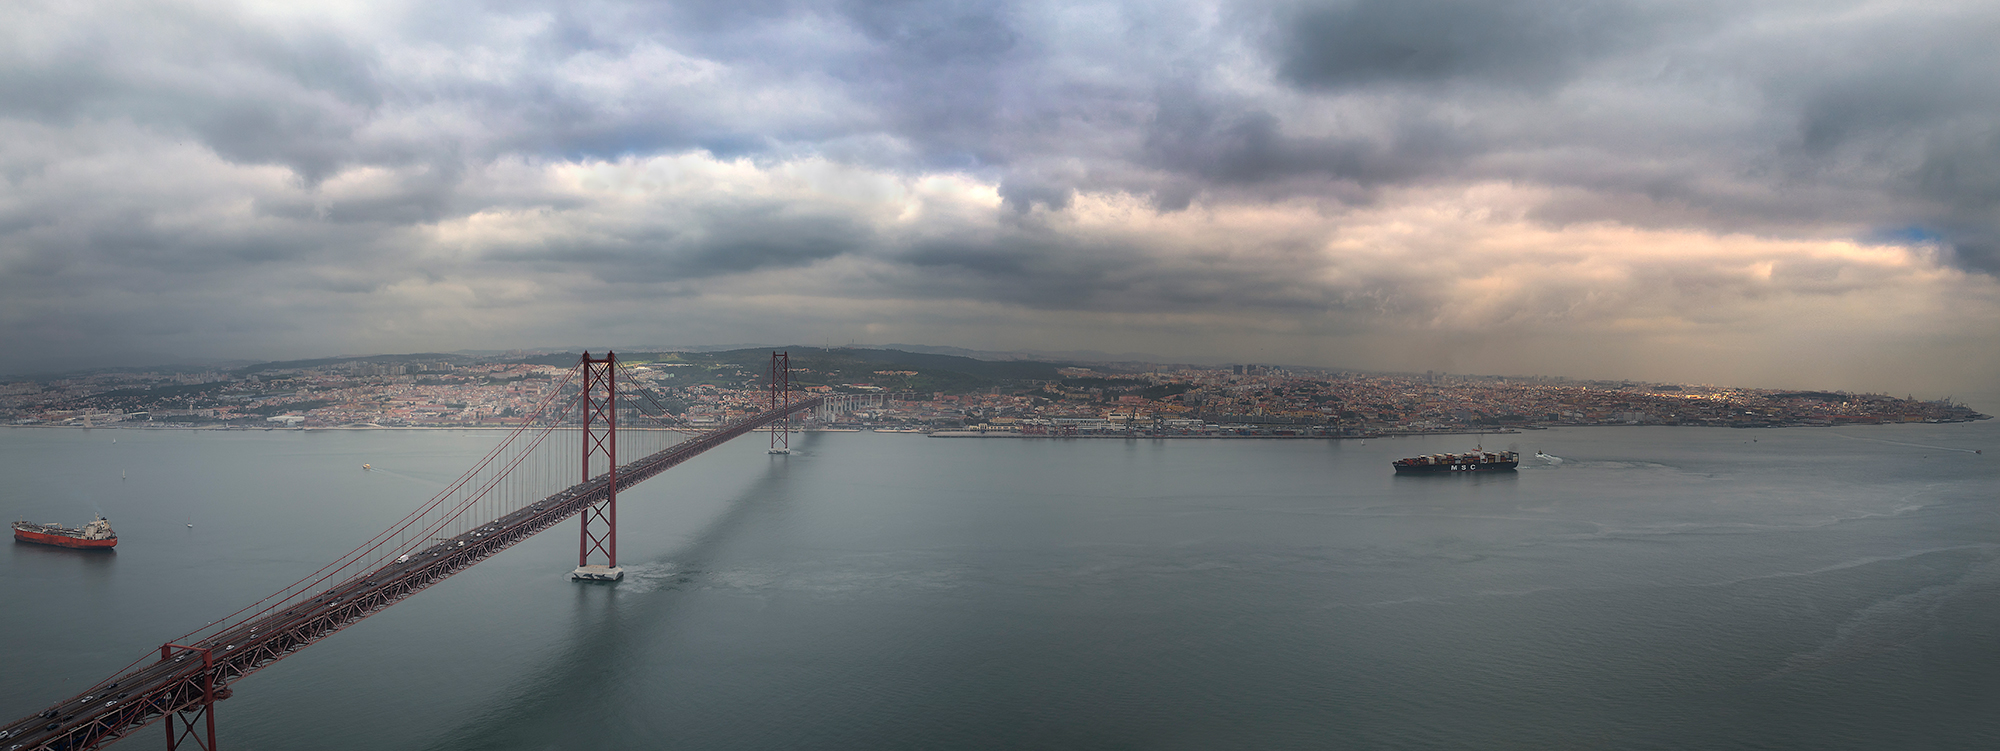 Lisbona dall'alto...